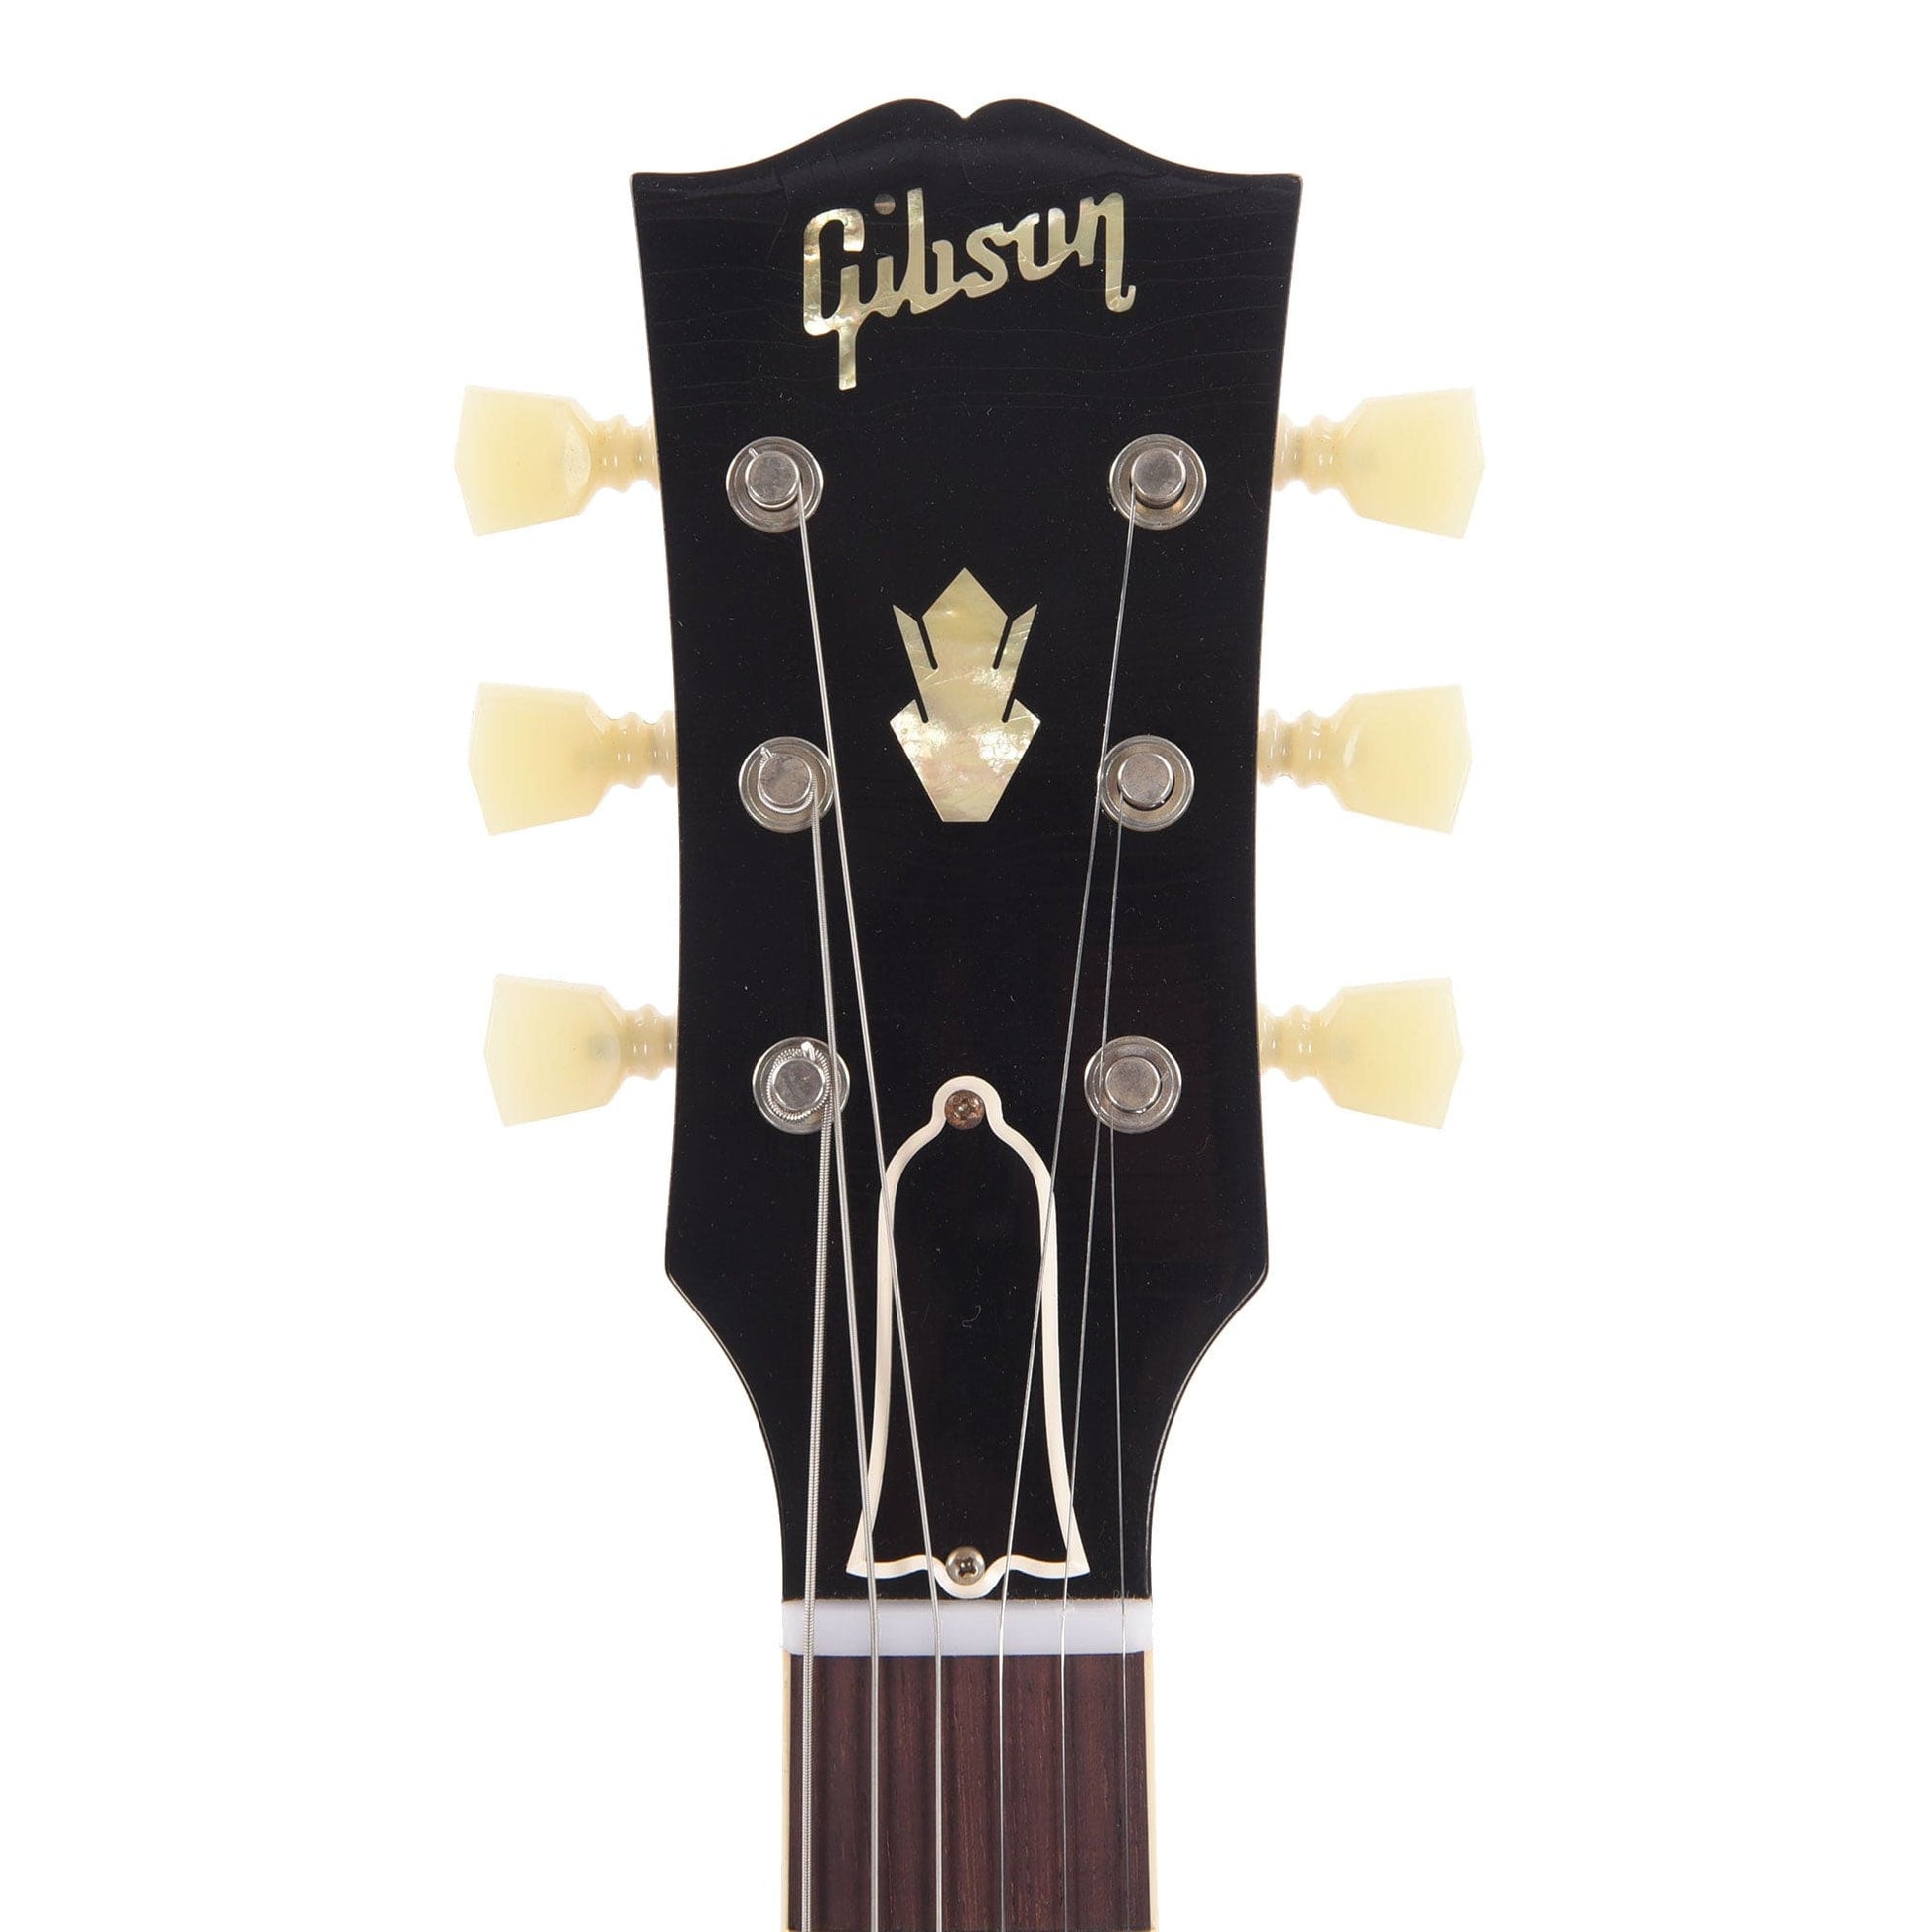 Gibson Custom Shop 1961 ES-335 Reissue "CME Spec" Antique Gold Mist Poly Murphy Lab Ultra Light Aged Electric Guitars / Semi-Hollow